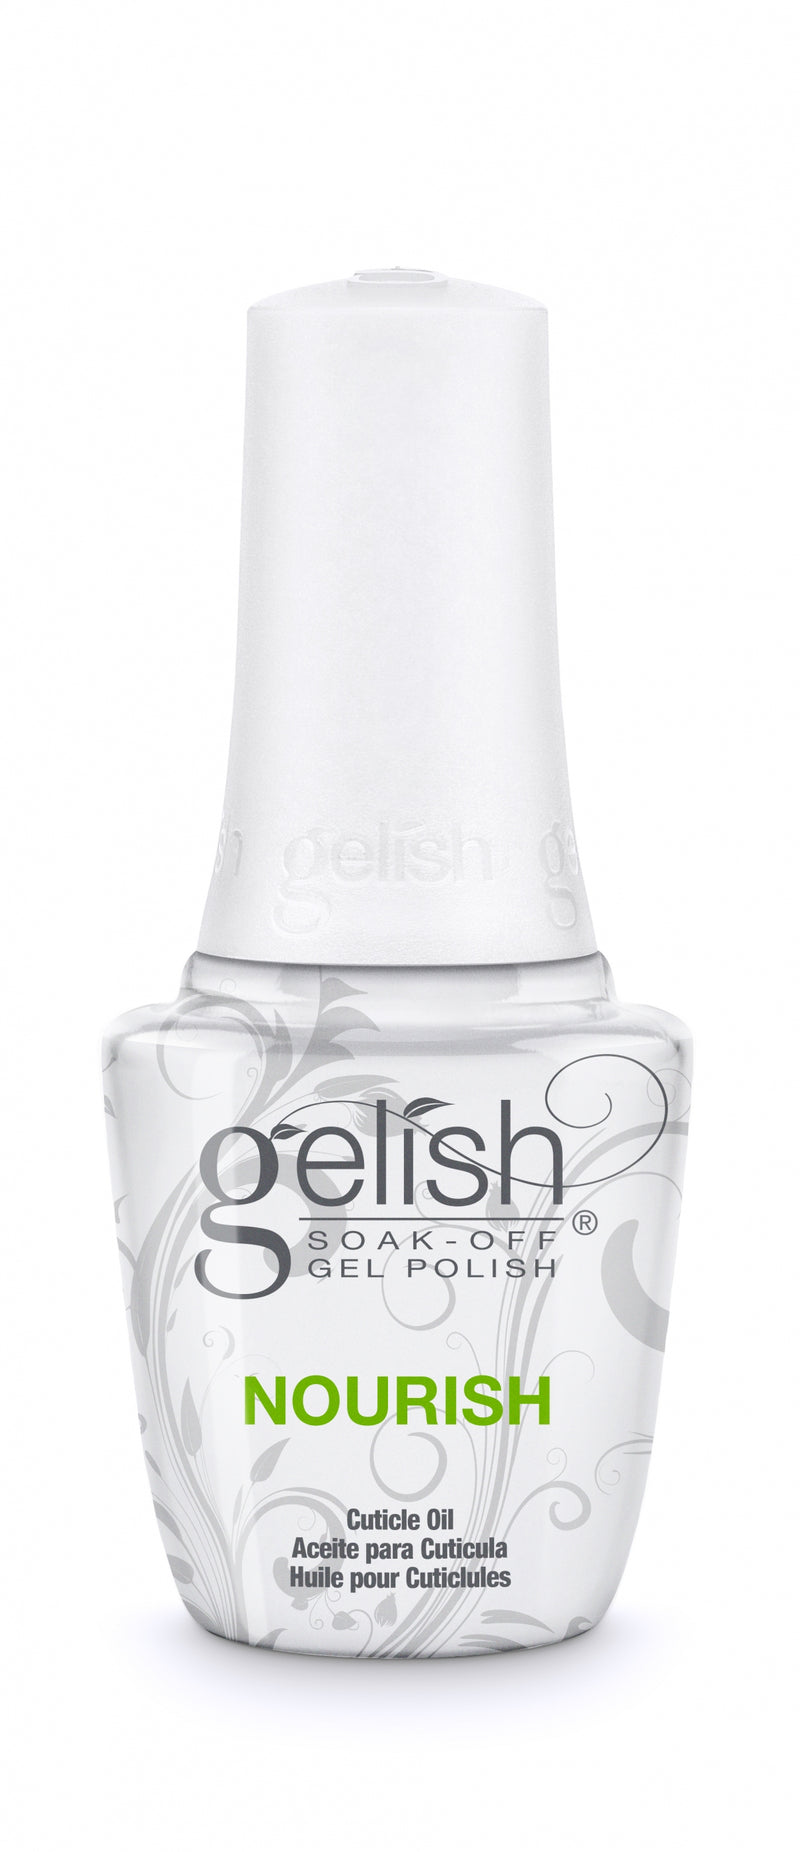 Gelish Gel Polish Essentials (2017 New Bottle) - Nourish - Cuticle Oil